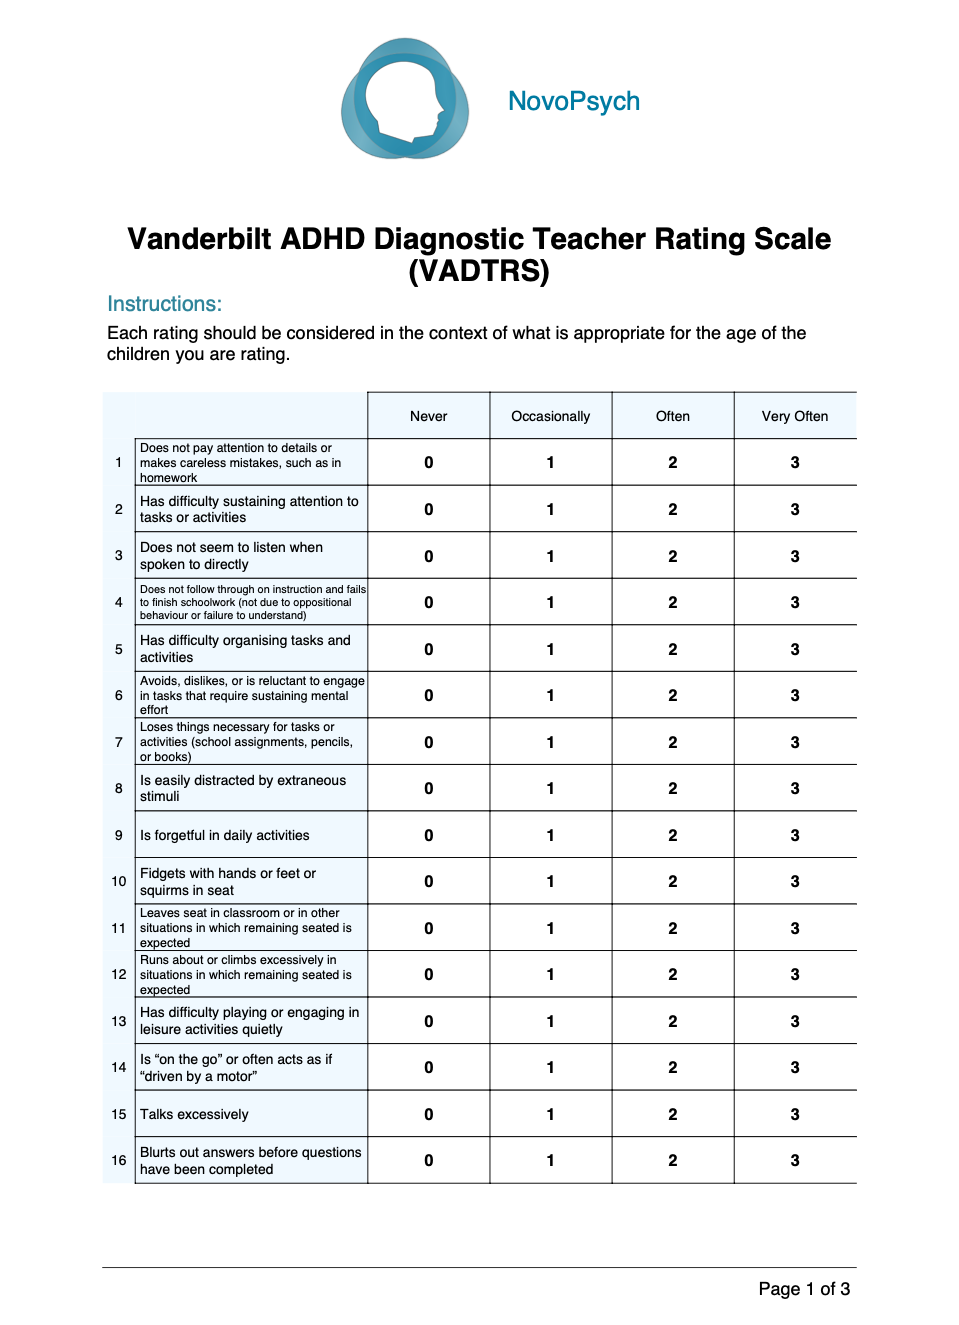 Vanderbilt ADHD Diagnostic Teacher Rating Scale VADTRS NovoPsych